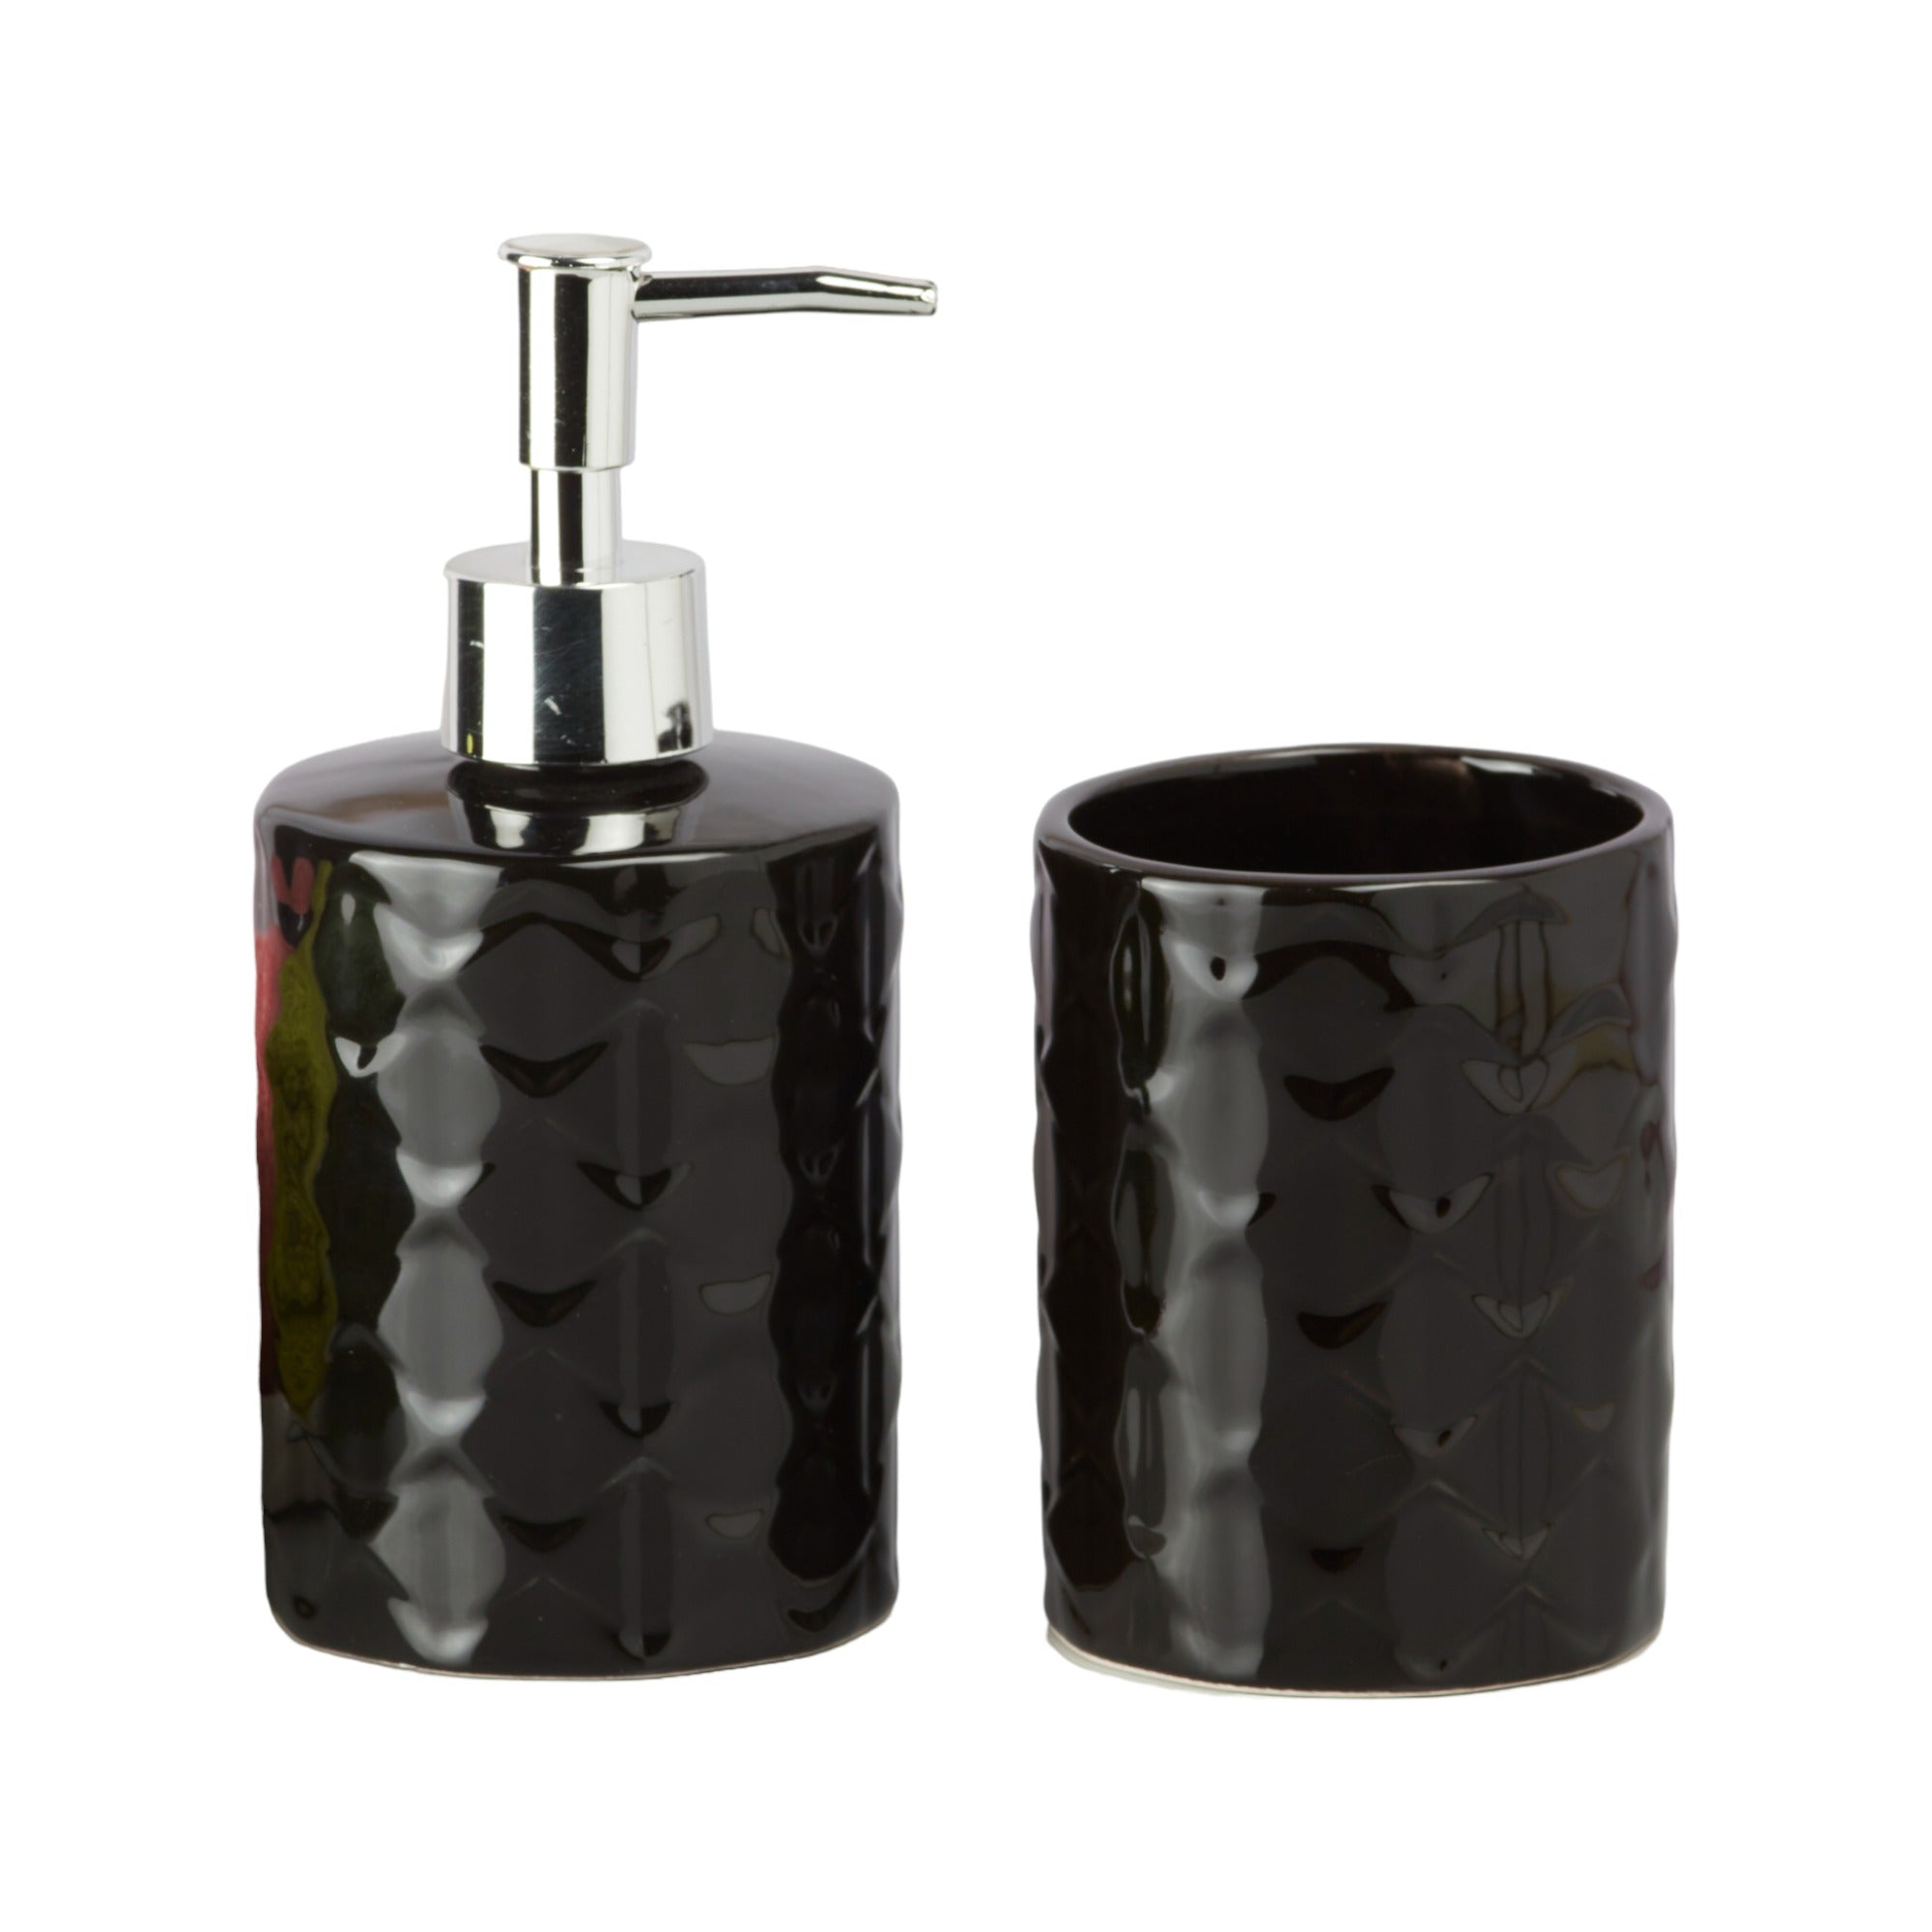 Ceramic Bathroom Set of 2 with Soap Dispenser (9721)